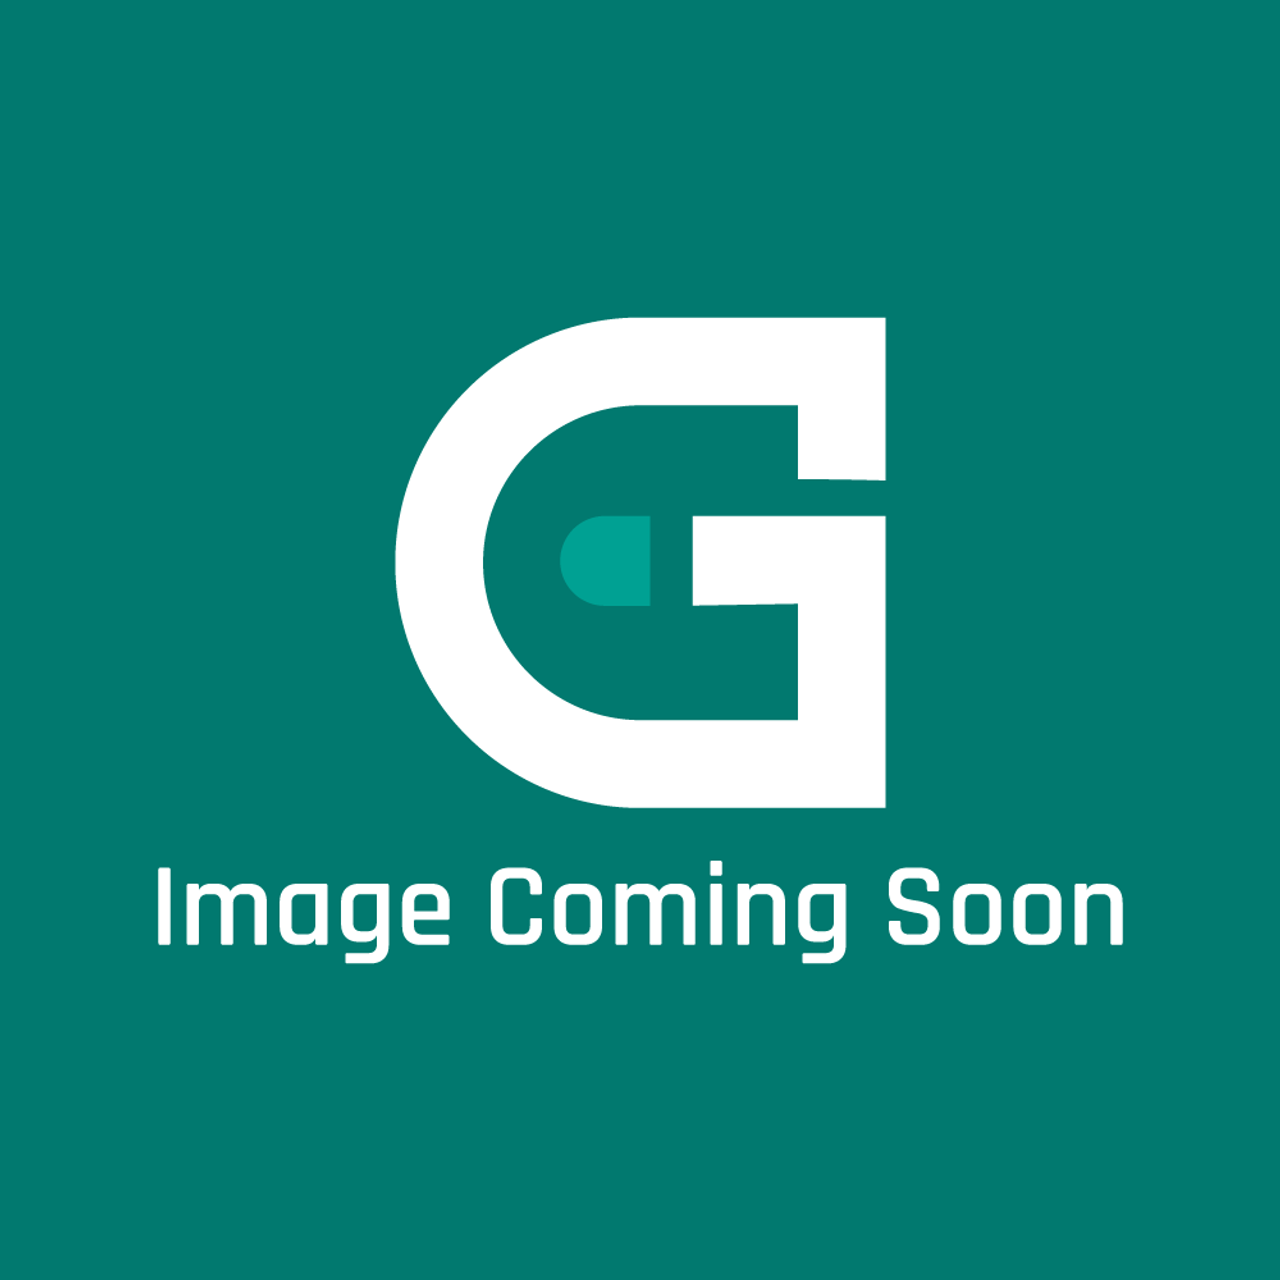 GE Appliances WE12M37 - BELT - Image Coming Soon!